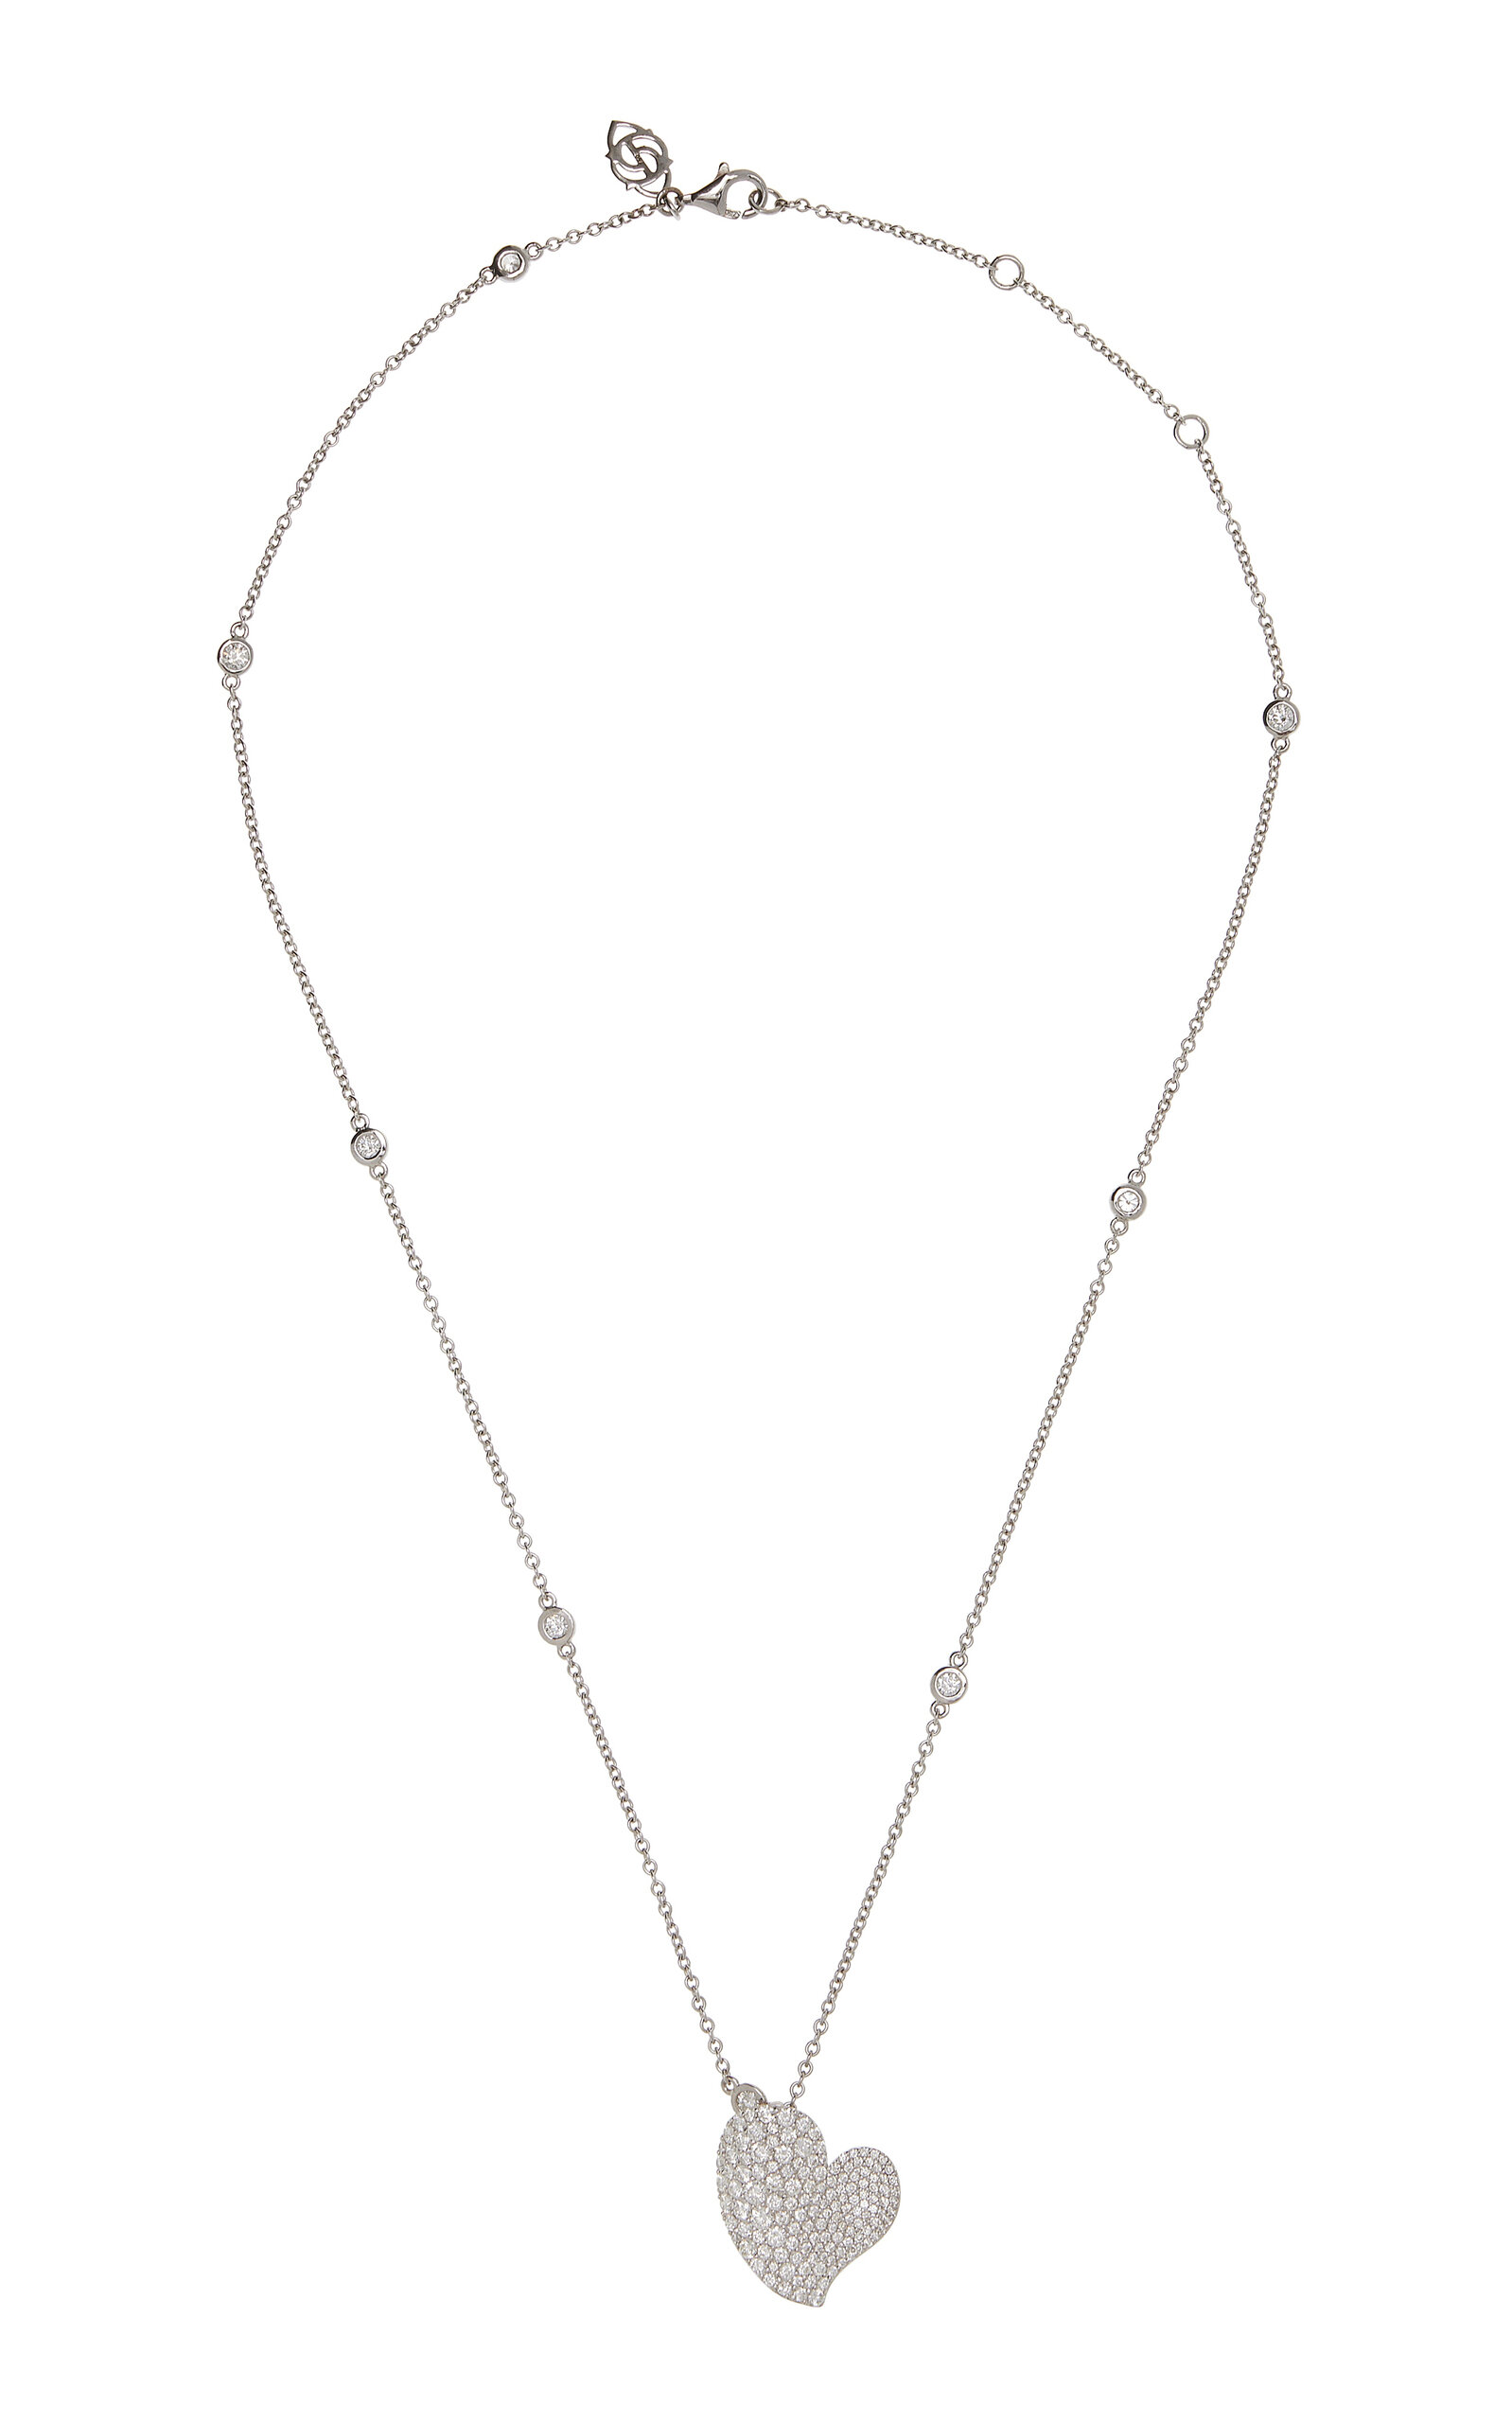 Piranesi Women's 18K White Gold Medium Wave Heart Necklace in White Diamond